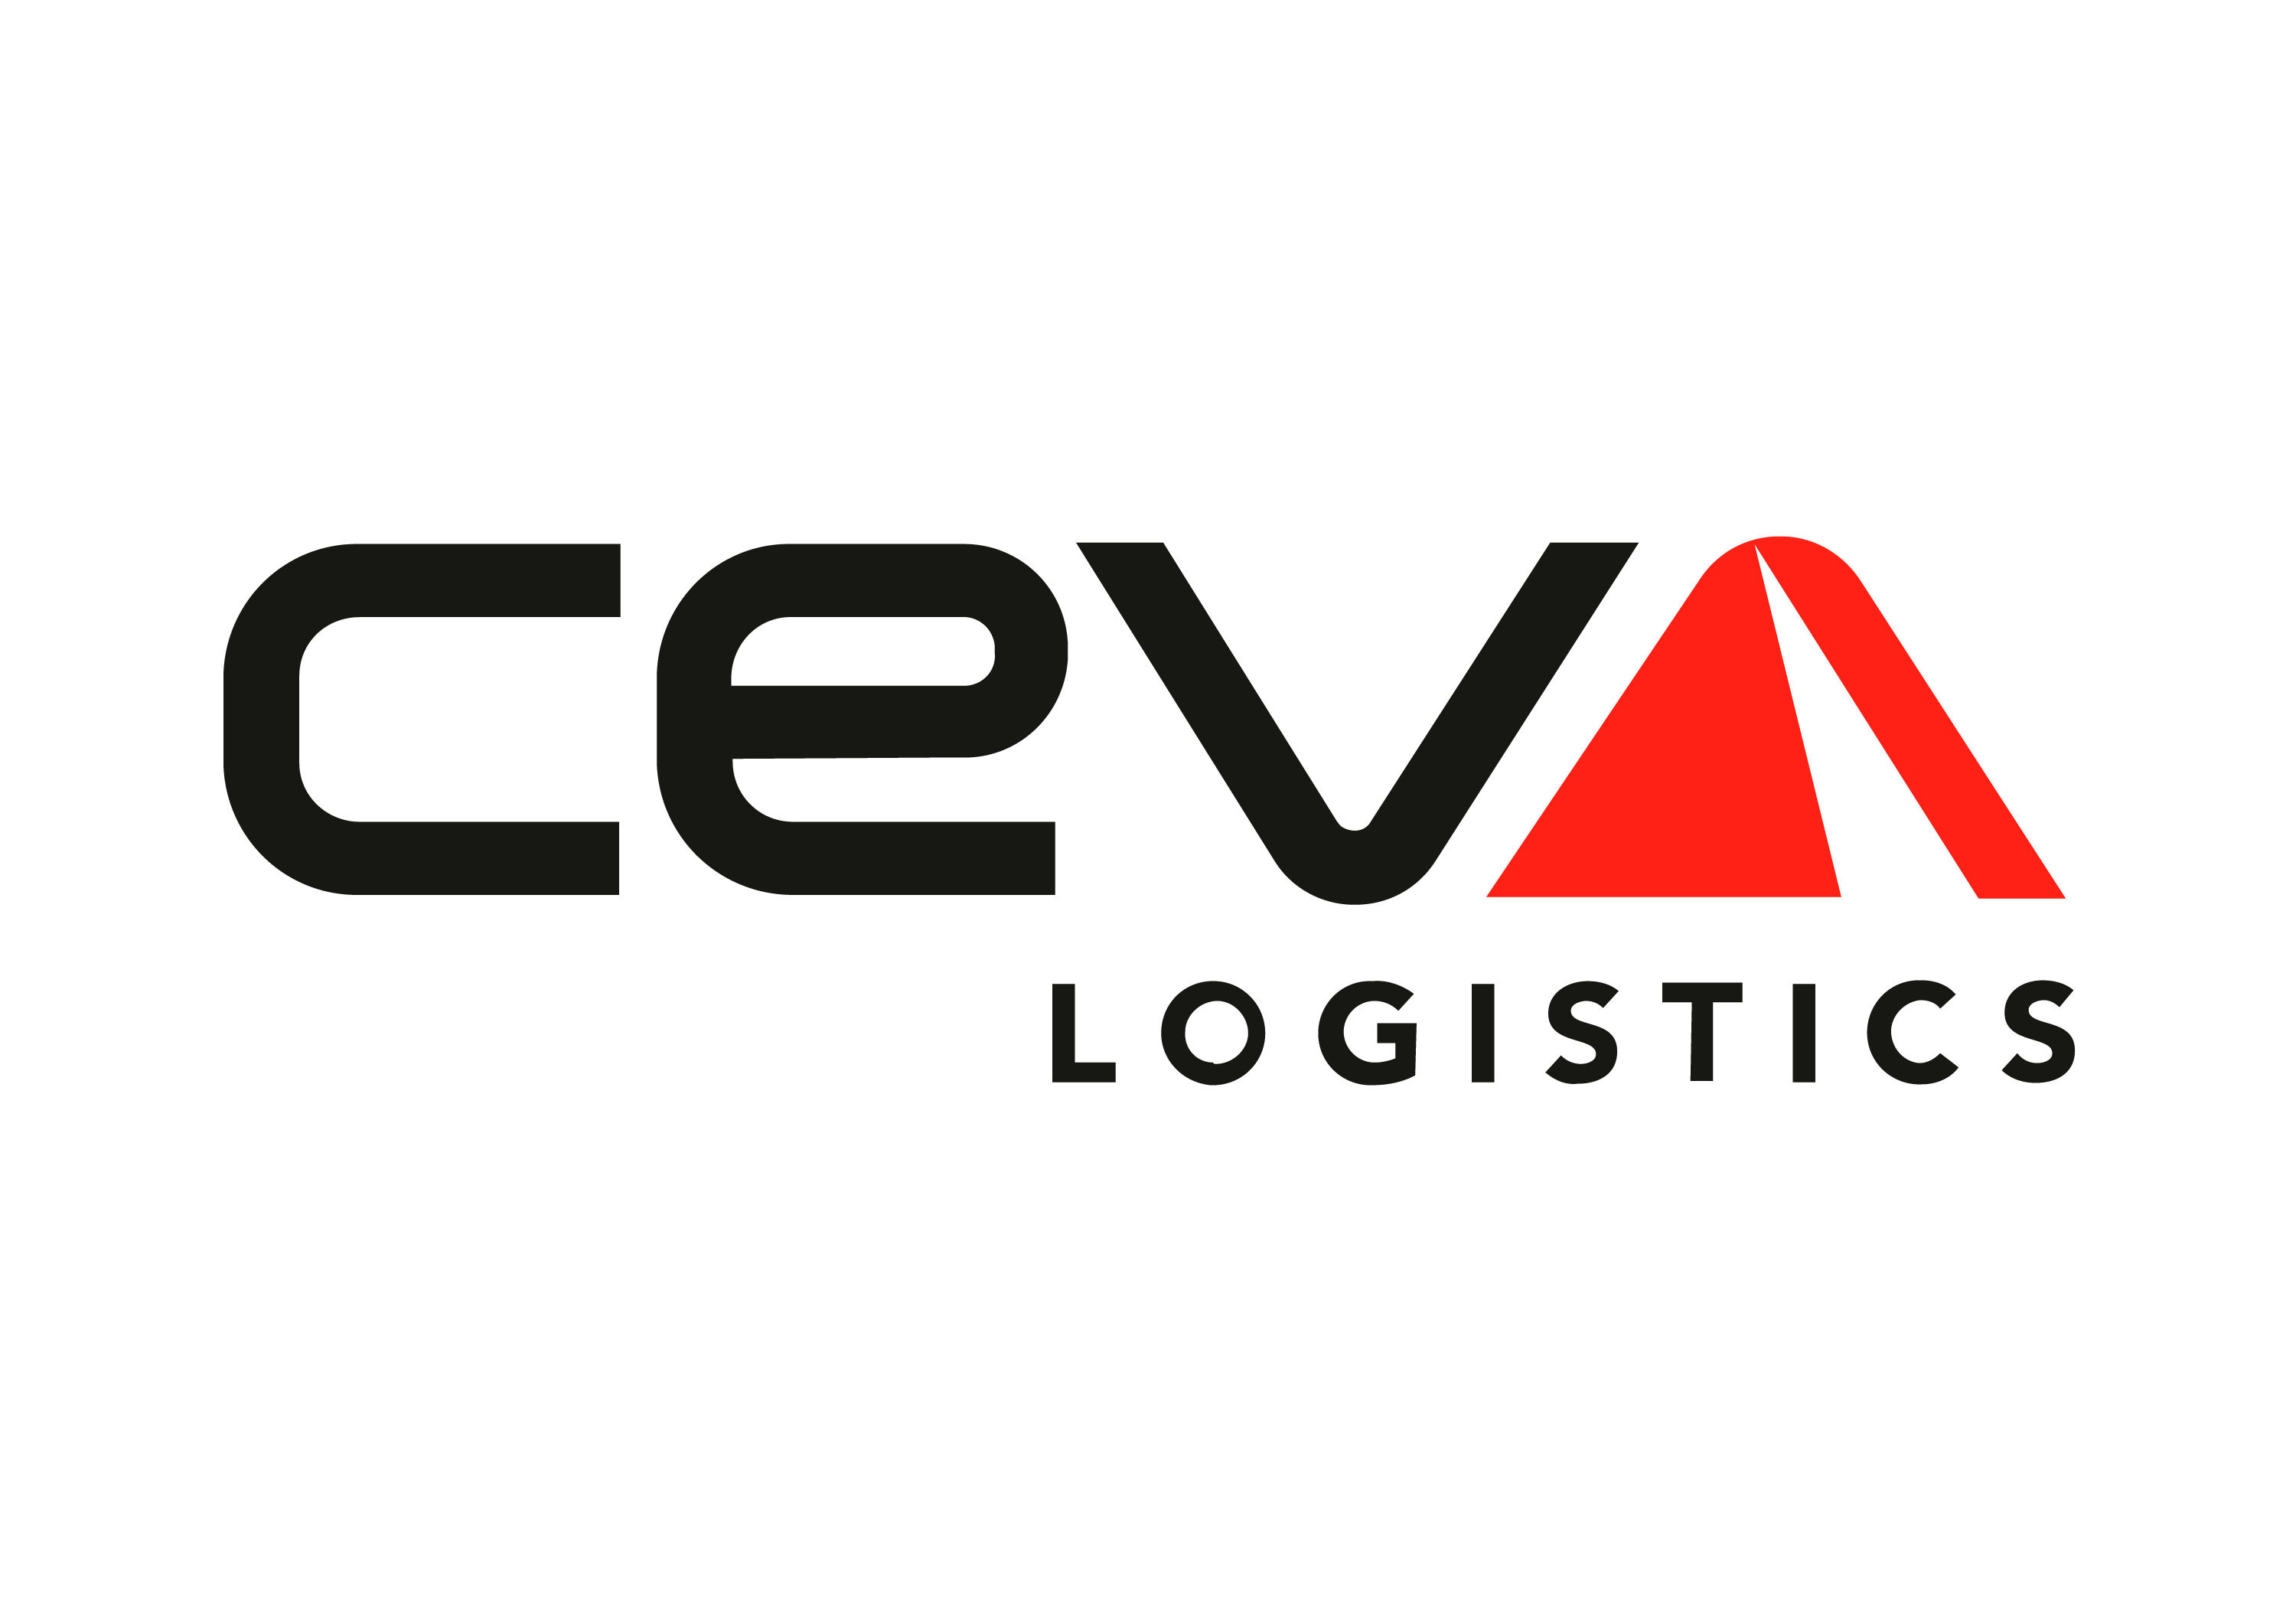 CEVA Lojistics New 1